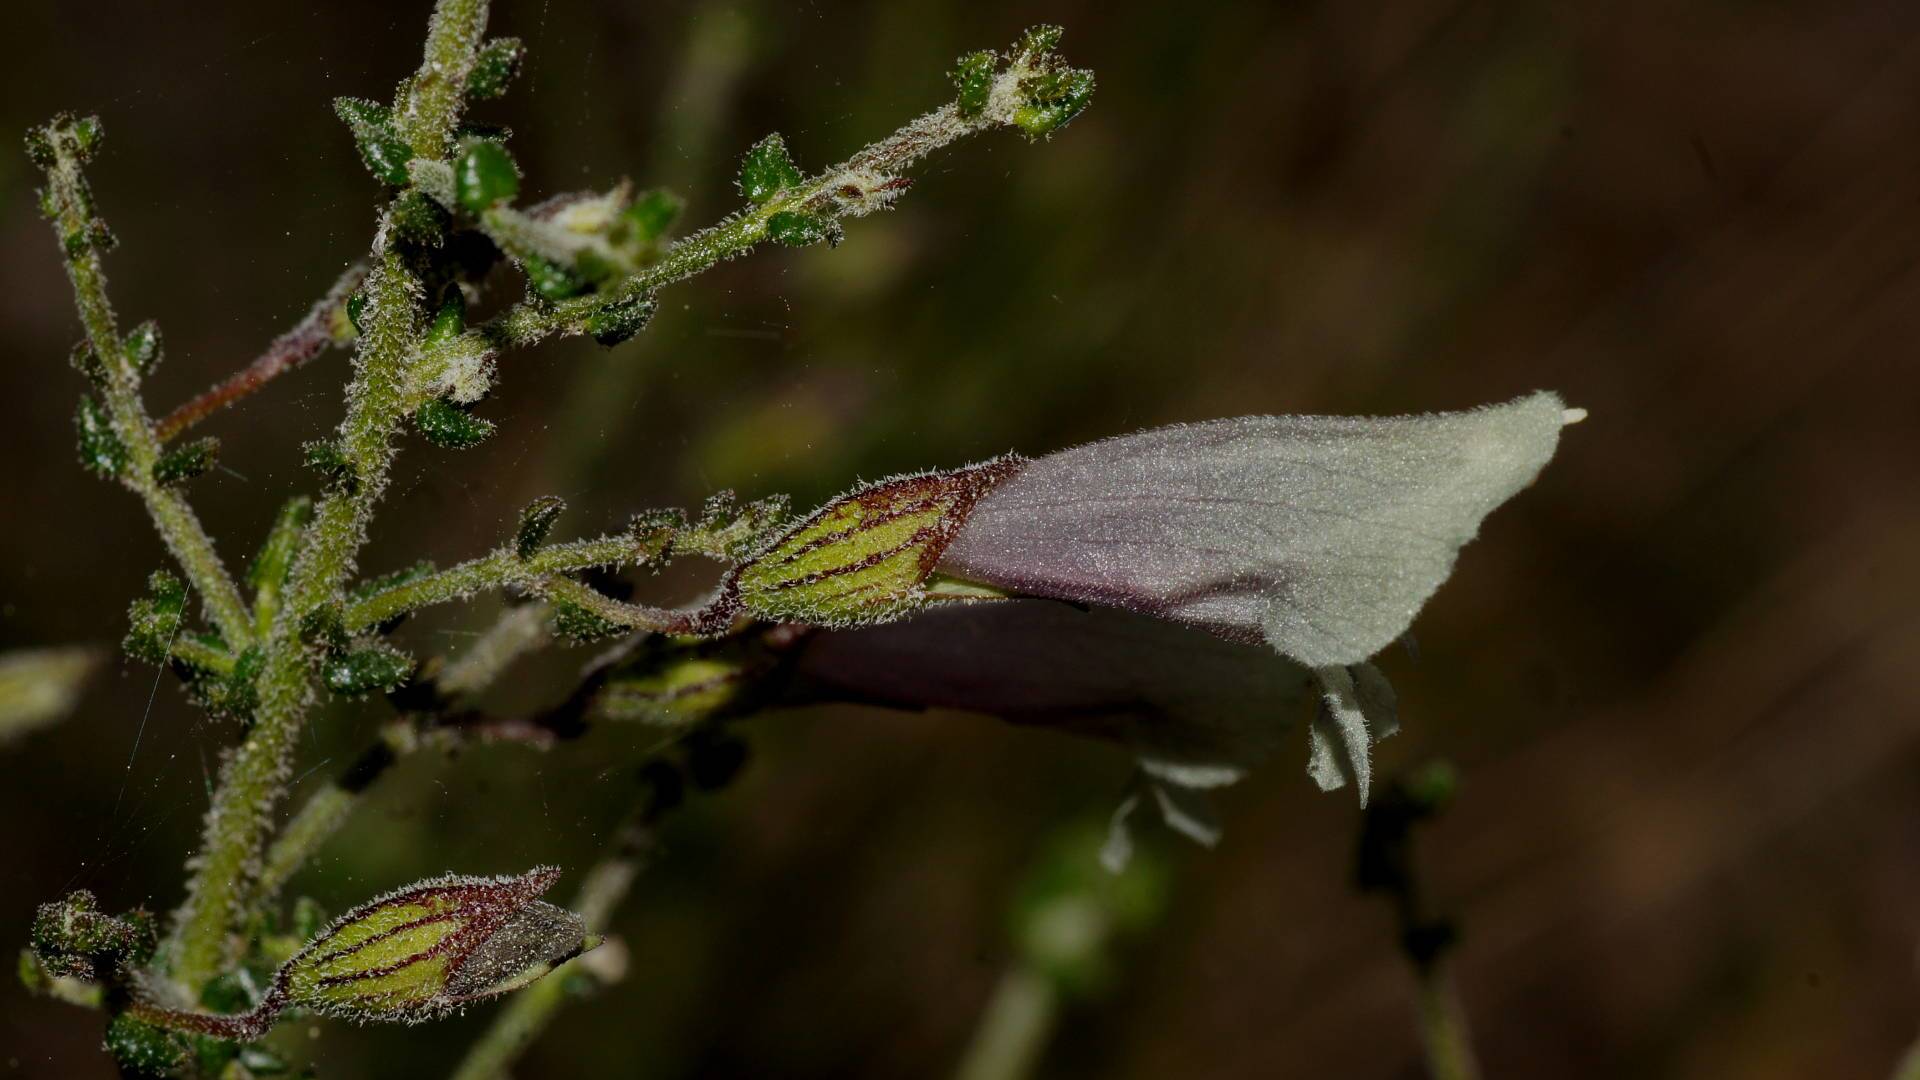 Green Mintbush (Prostanthera chlorantha)